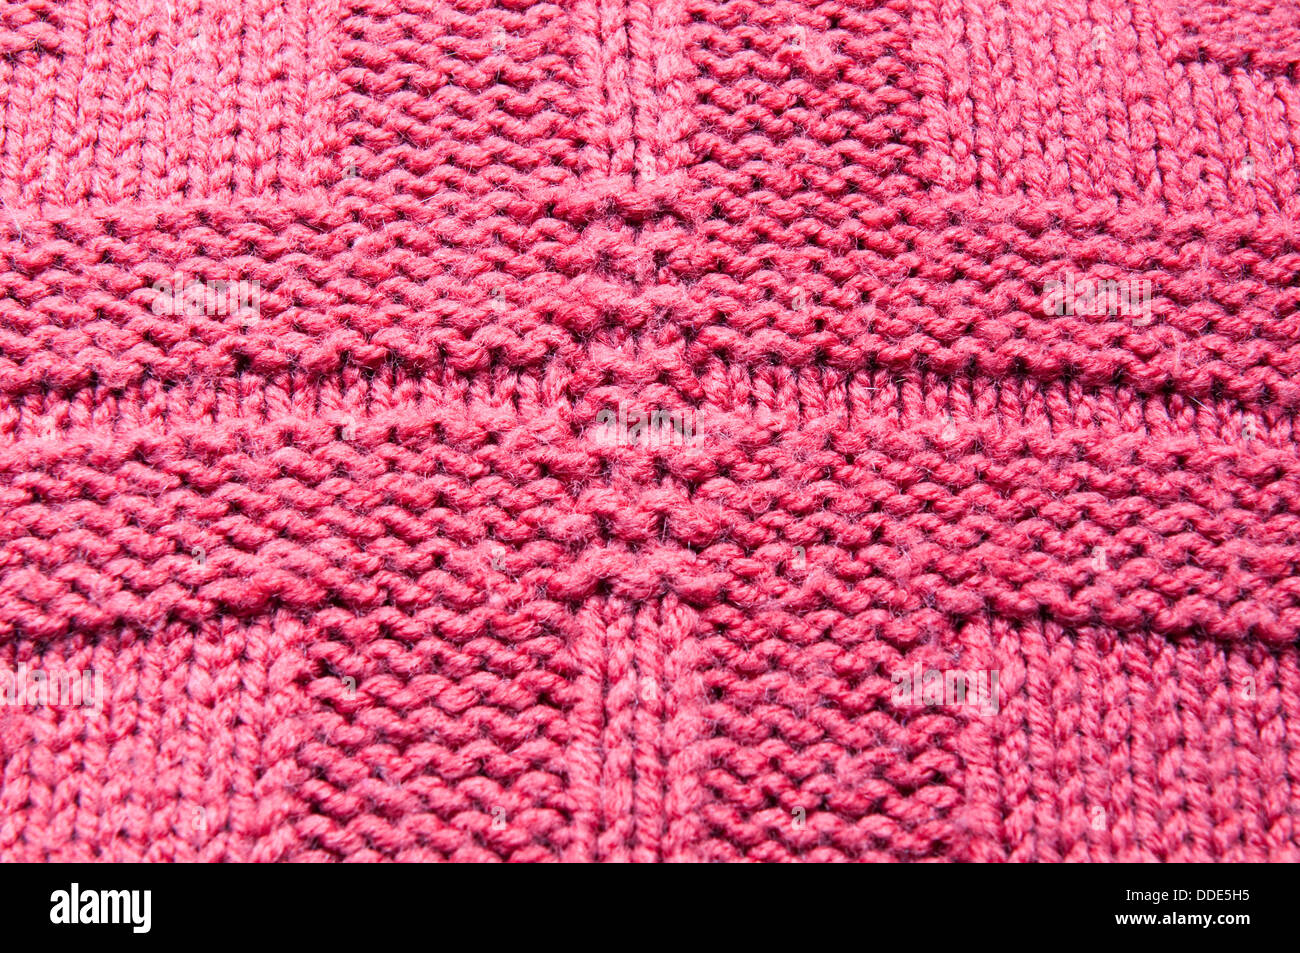 Knitting texture. Stock Photo